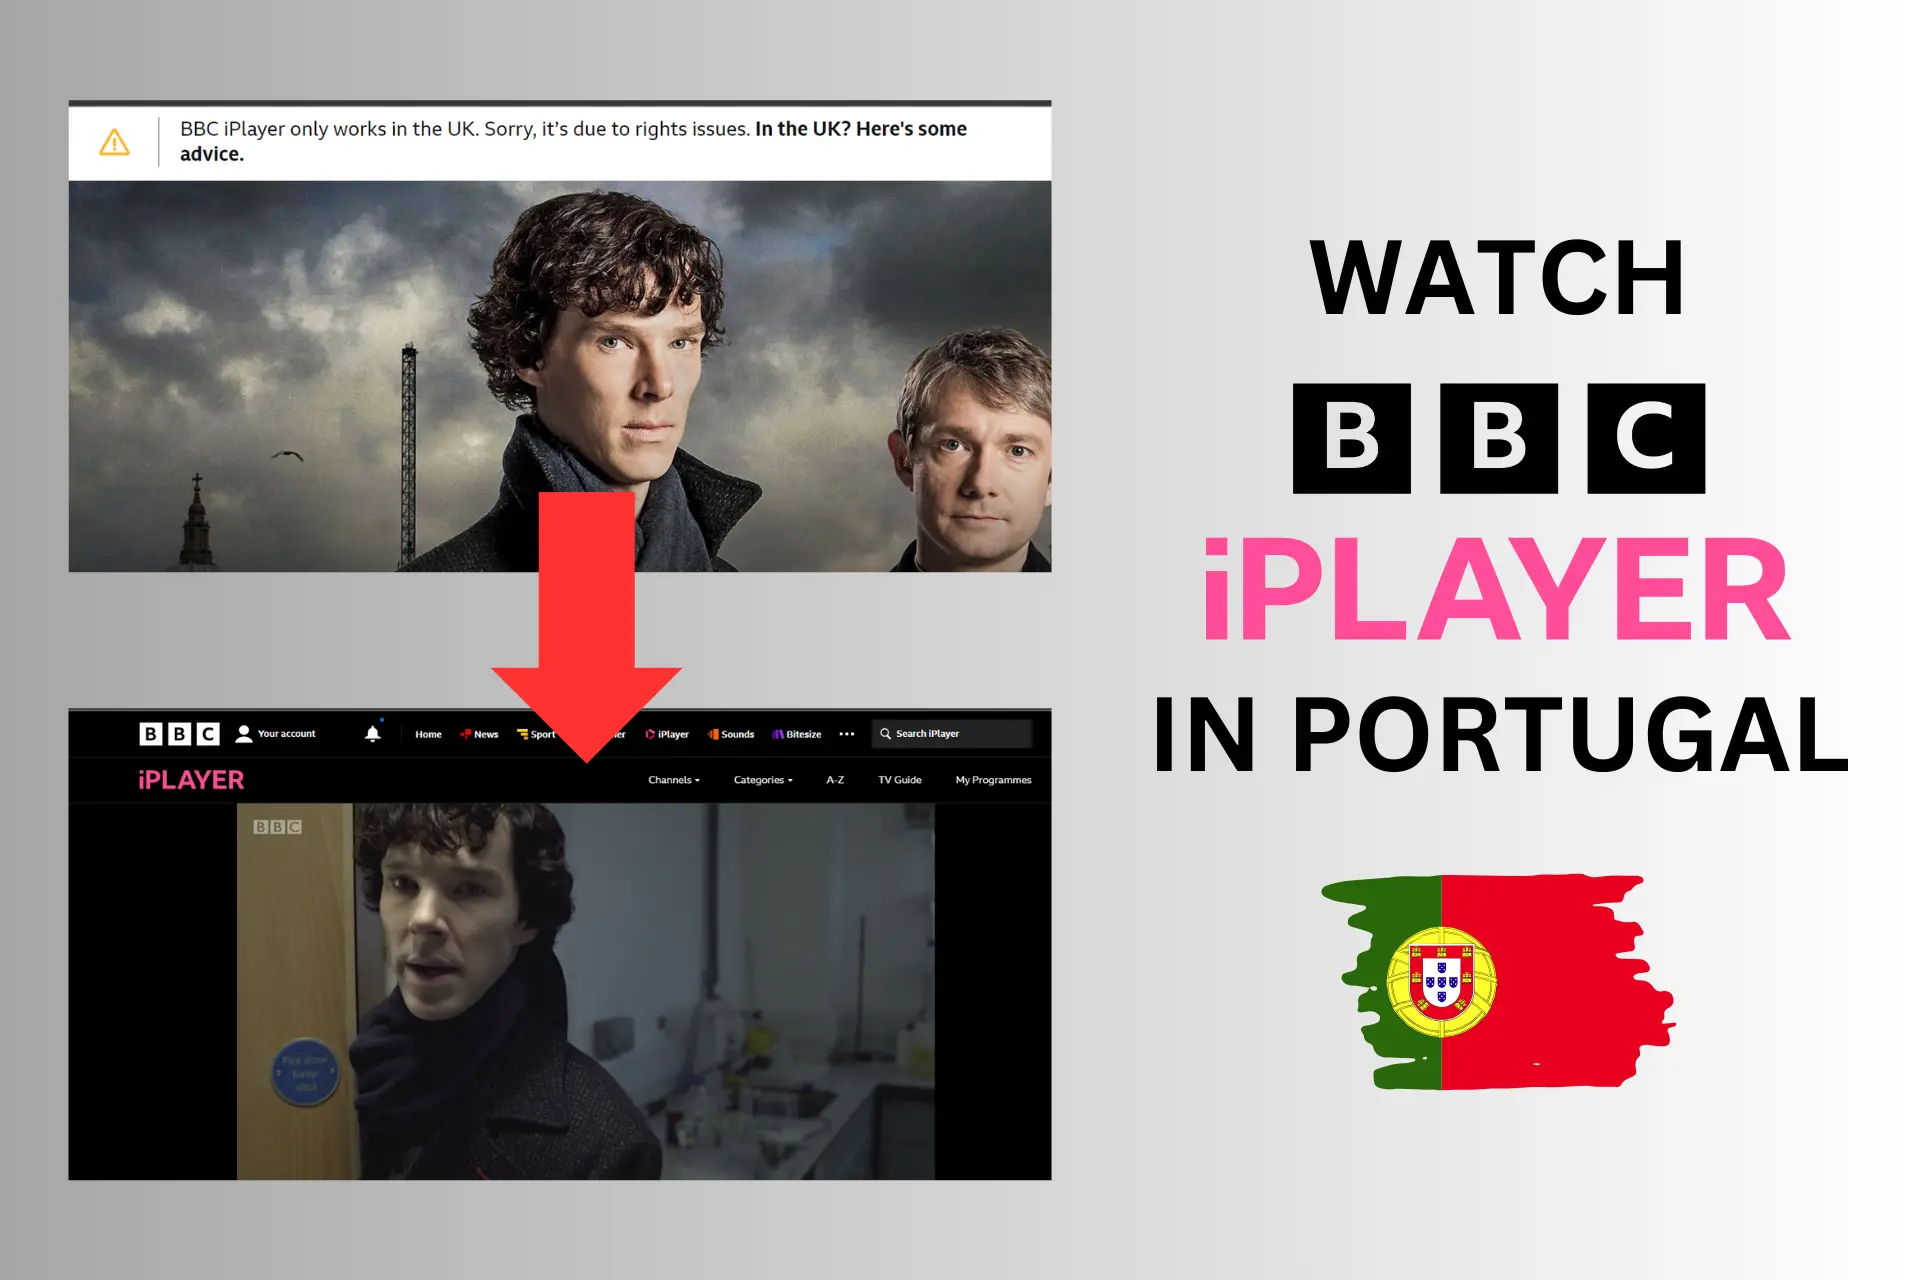 watch bbc iplayer in portugal